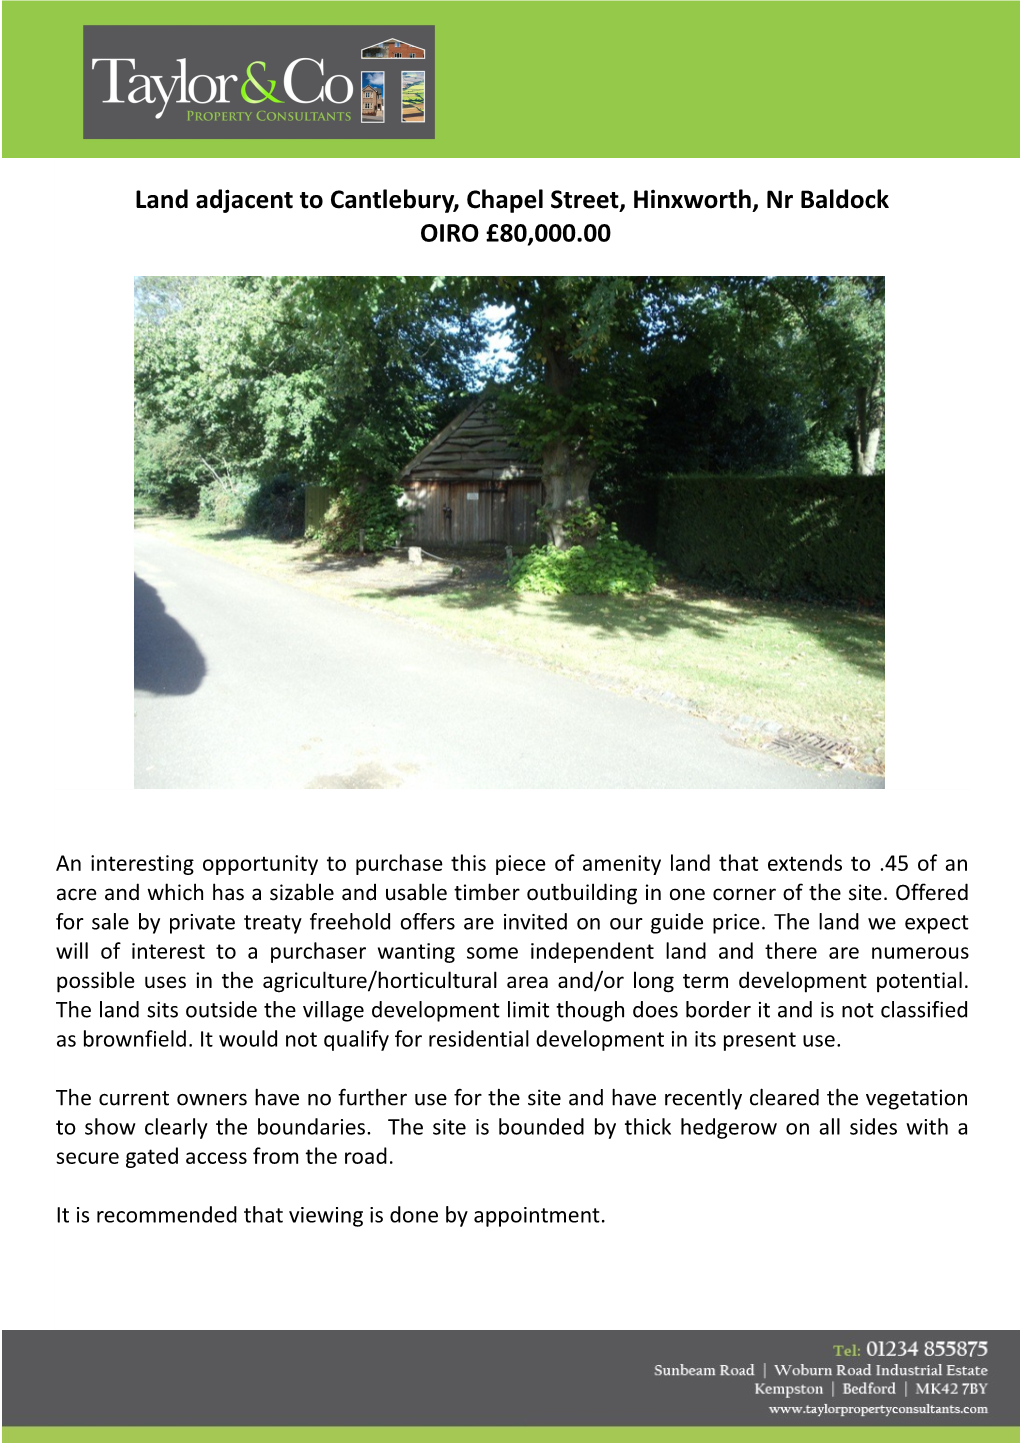 Land Adjacent to Cantlebury, Chapel Street, Hinxworth, Nr Baldock OIRO £80,000.00